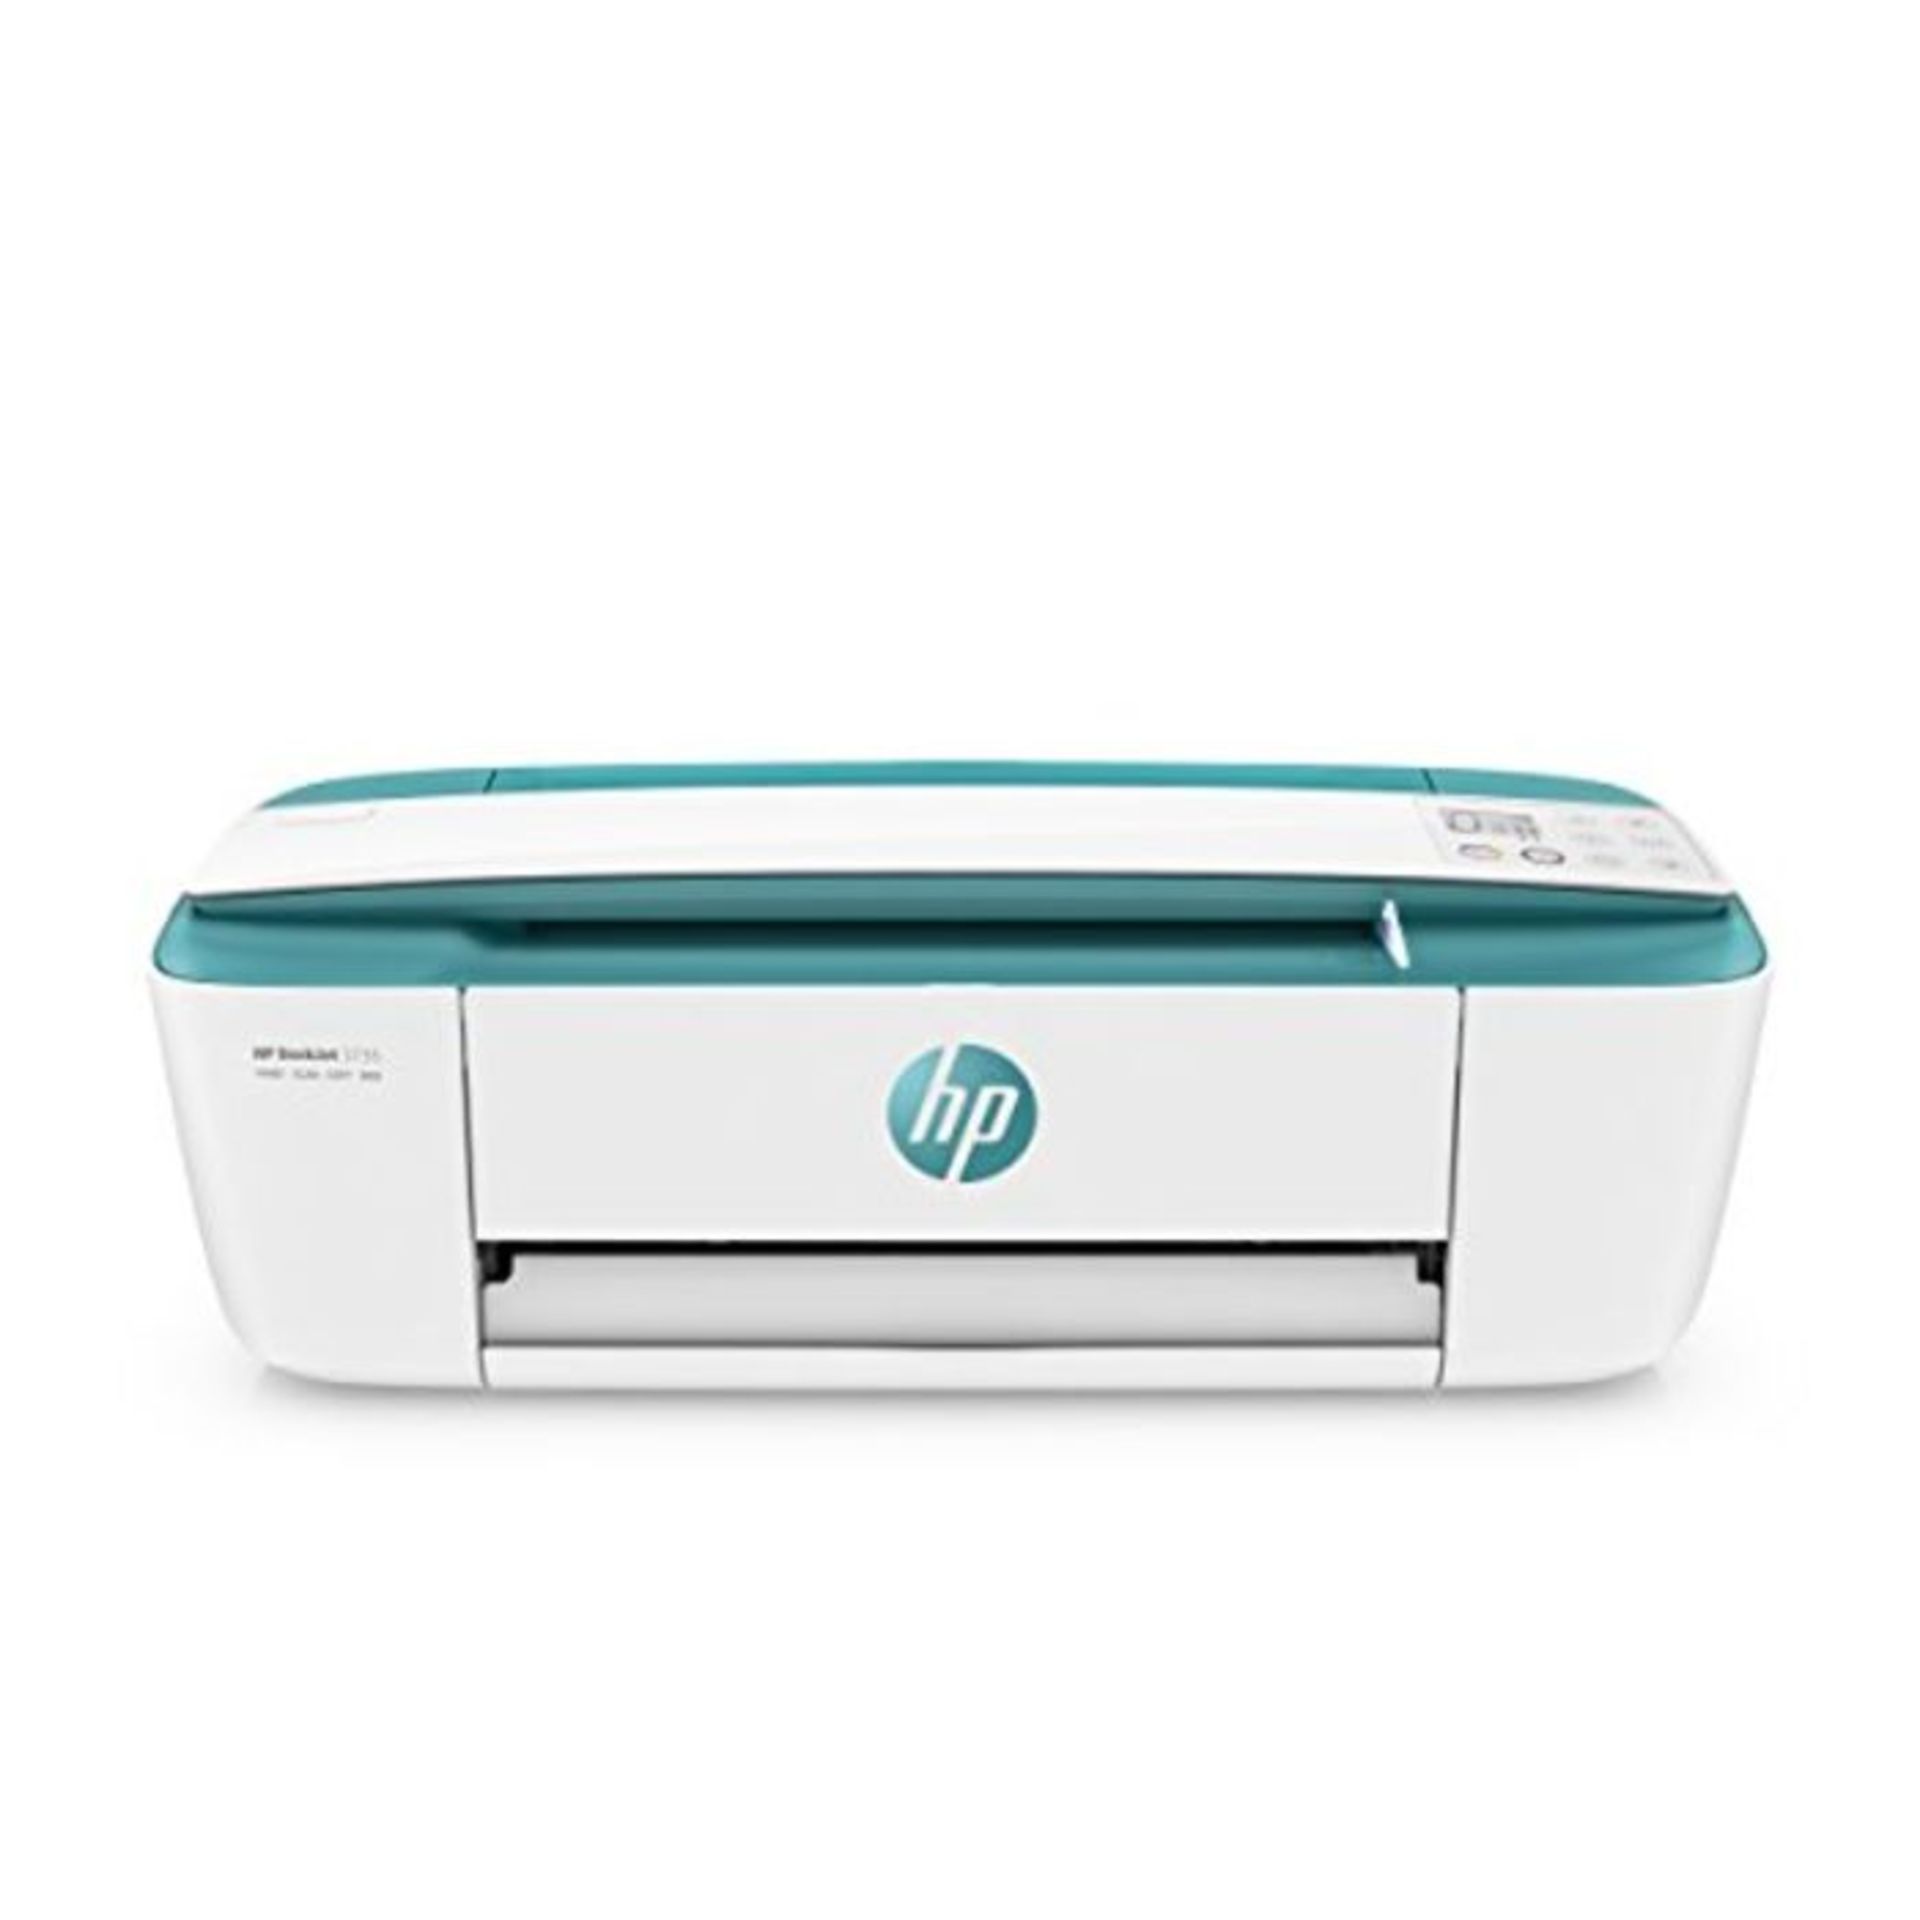 HP Deskjet 3735 AIO Multifunctional Printer